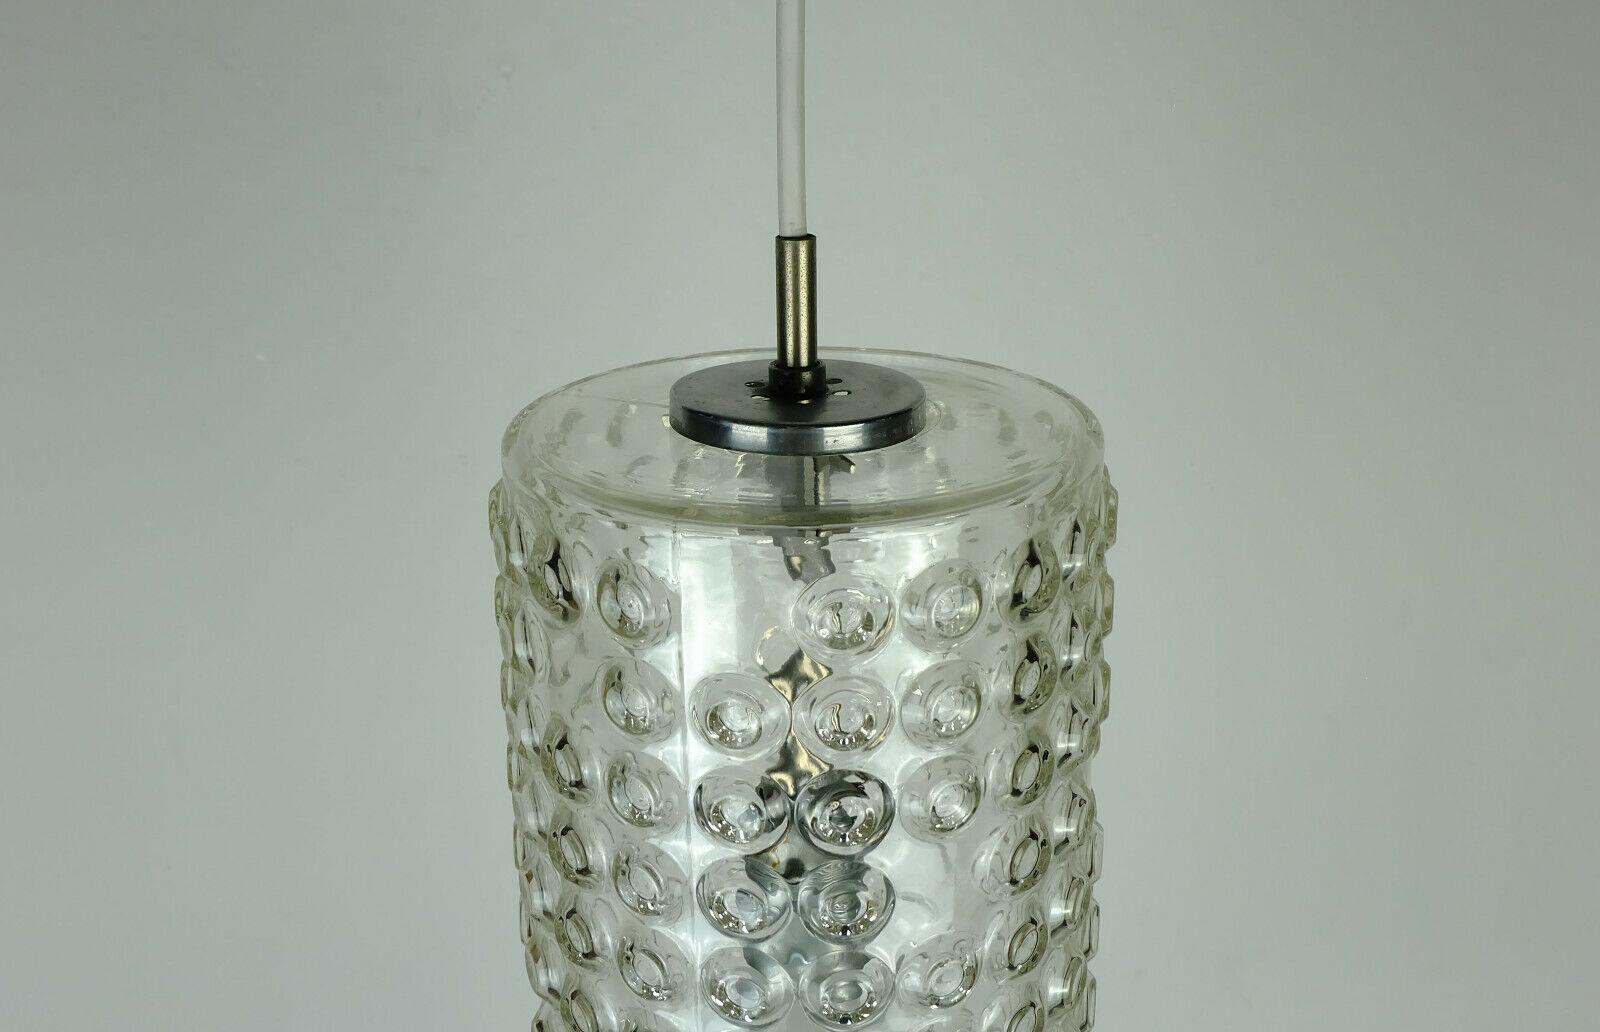 1 of 2 Huge Cylindrical Pendant Light Staff Rolf Krueger 1967 Bubble Glass  For Sale 2